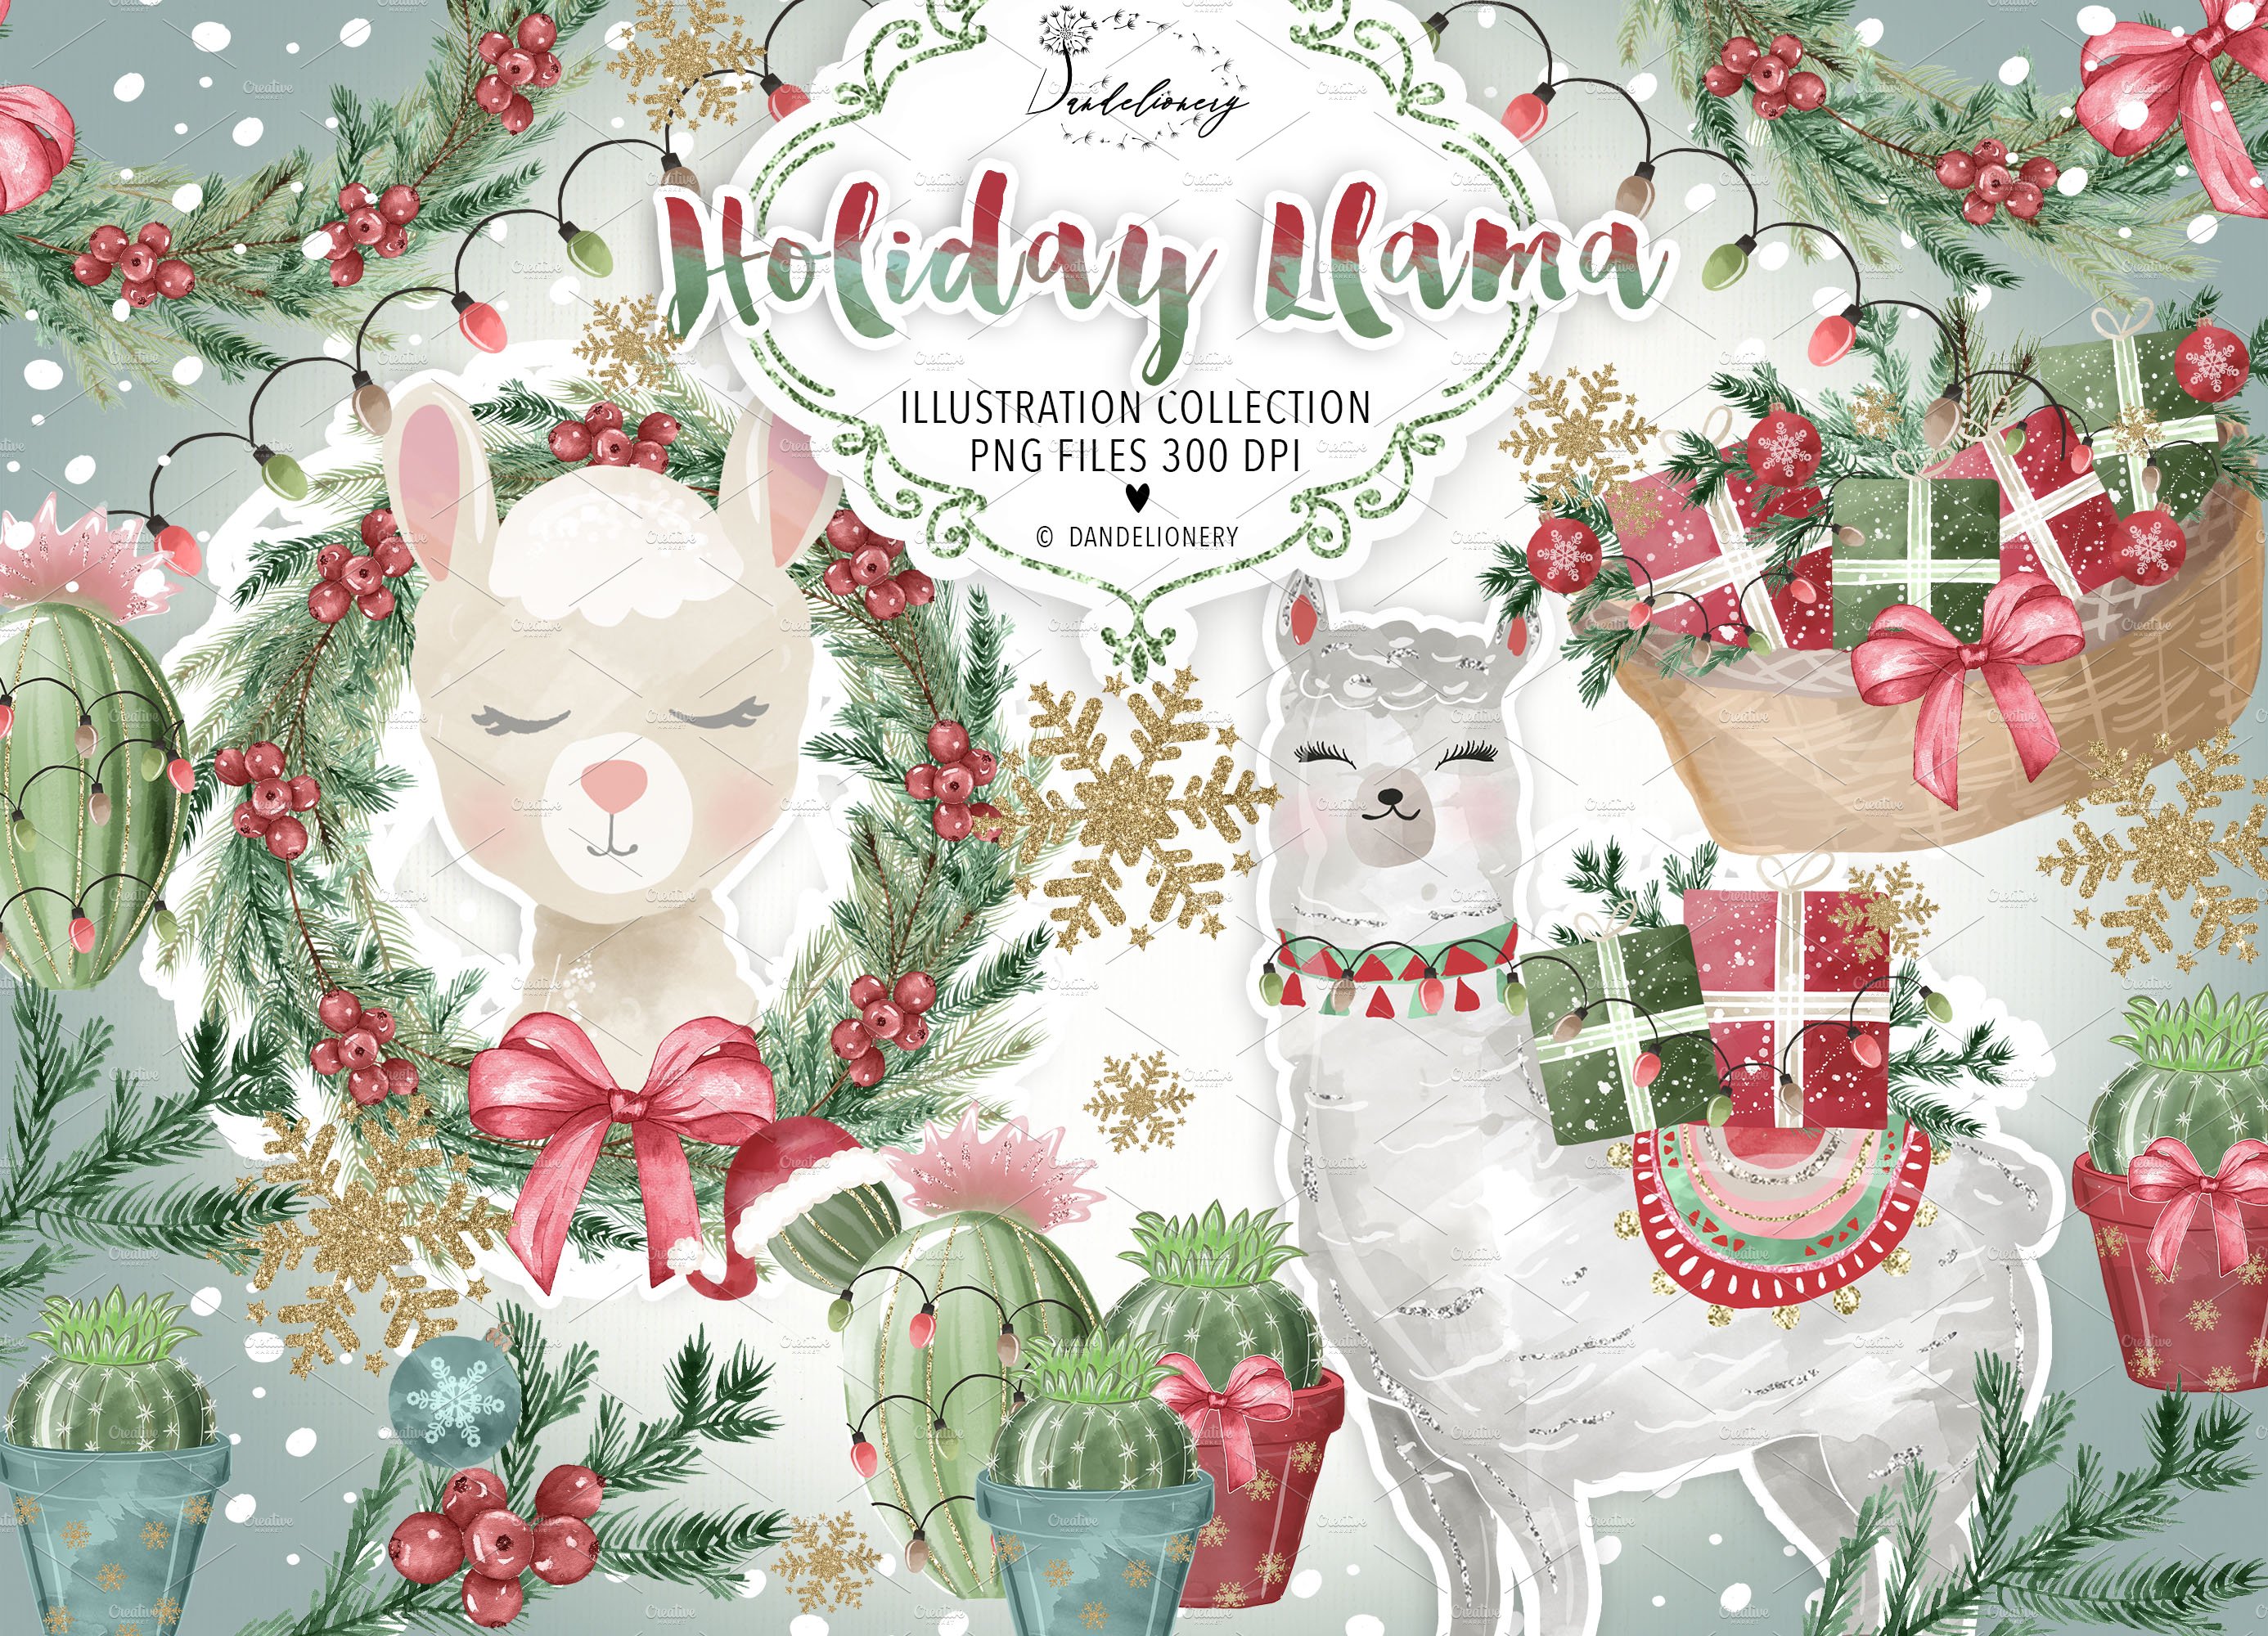 Holiday Llama design cover image.